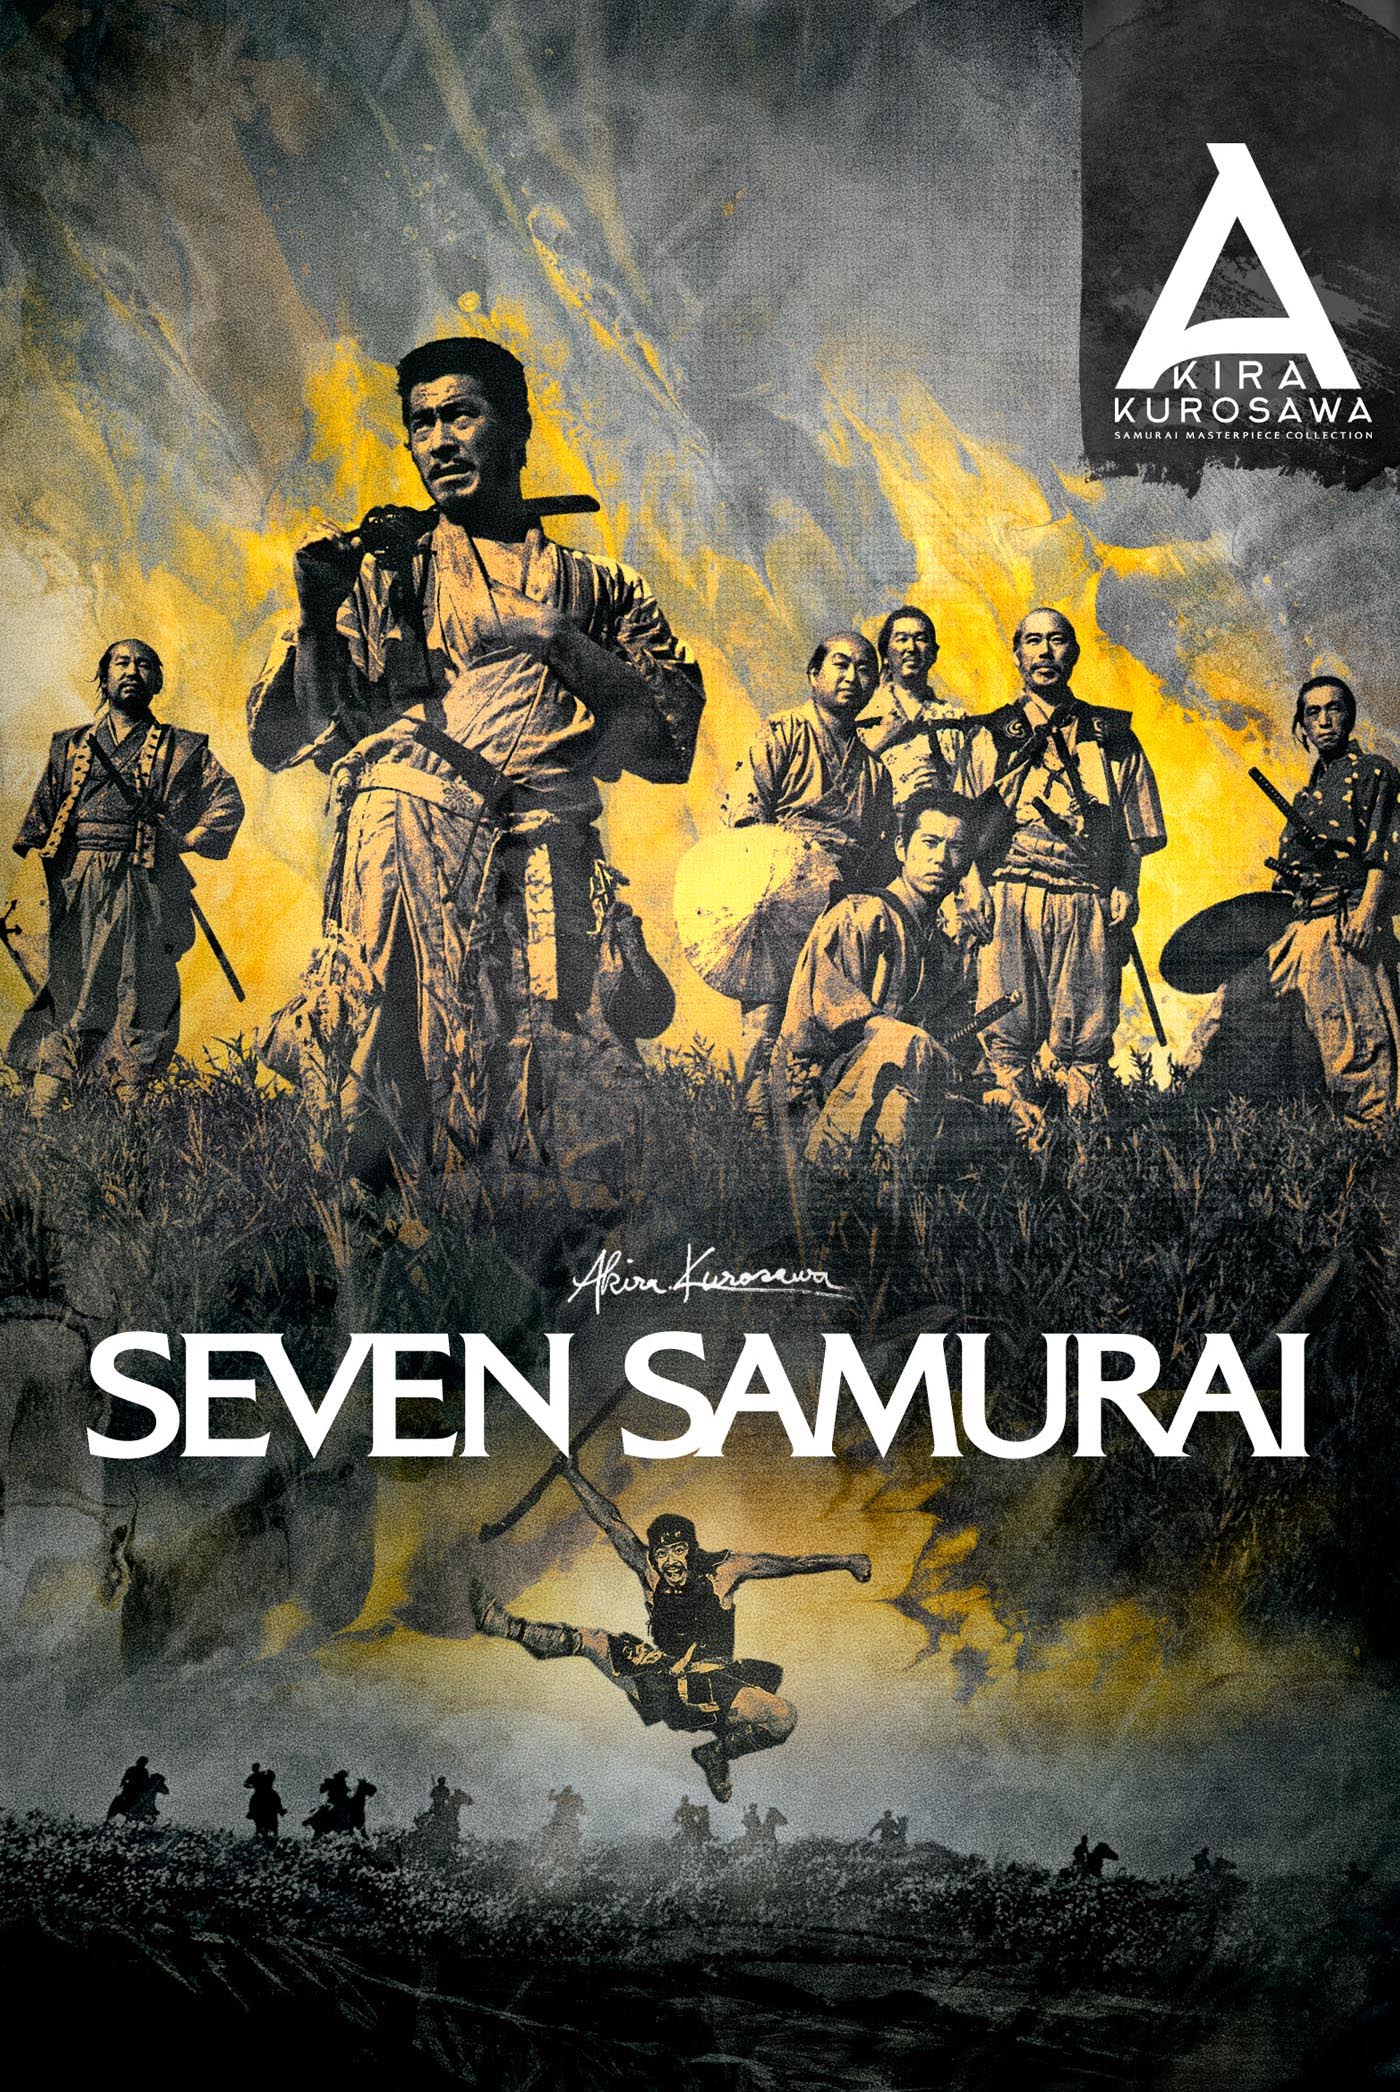 Omslag till filmen: Shichinin no samurai